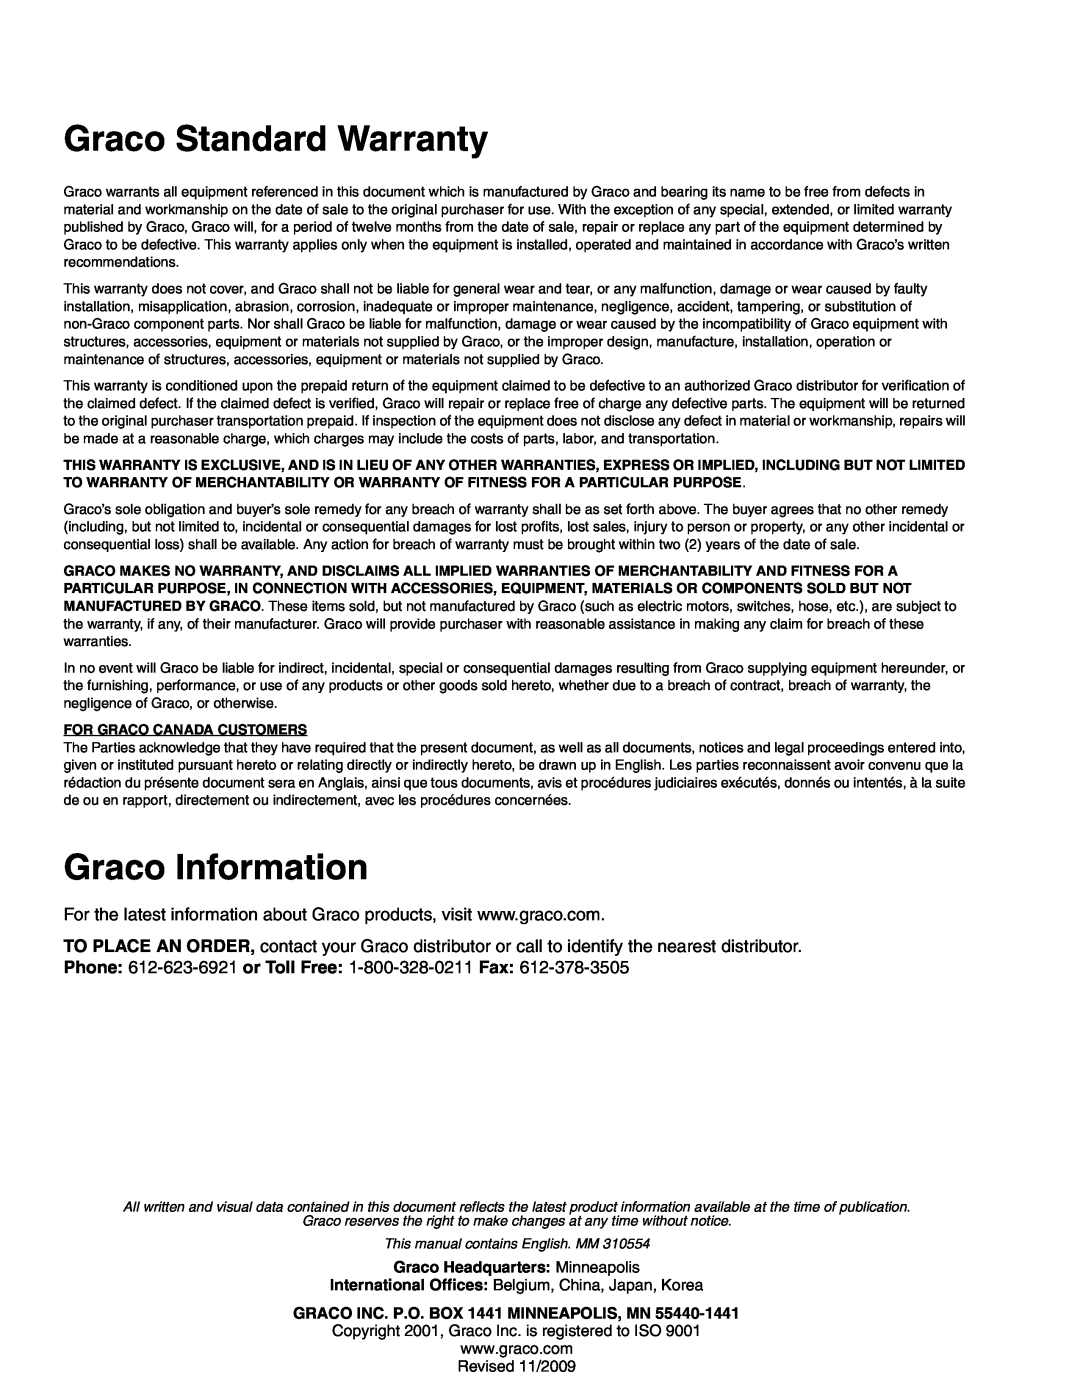 Graco 310554V important safety instructions Graco Standard Warranty, Graco Information, Graco Headquarters Minneapolis 